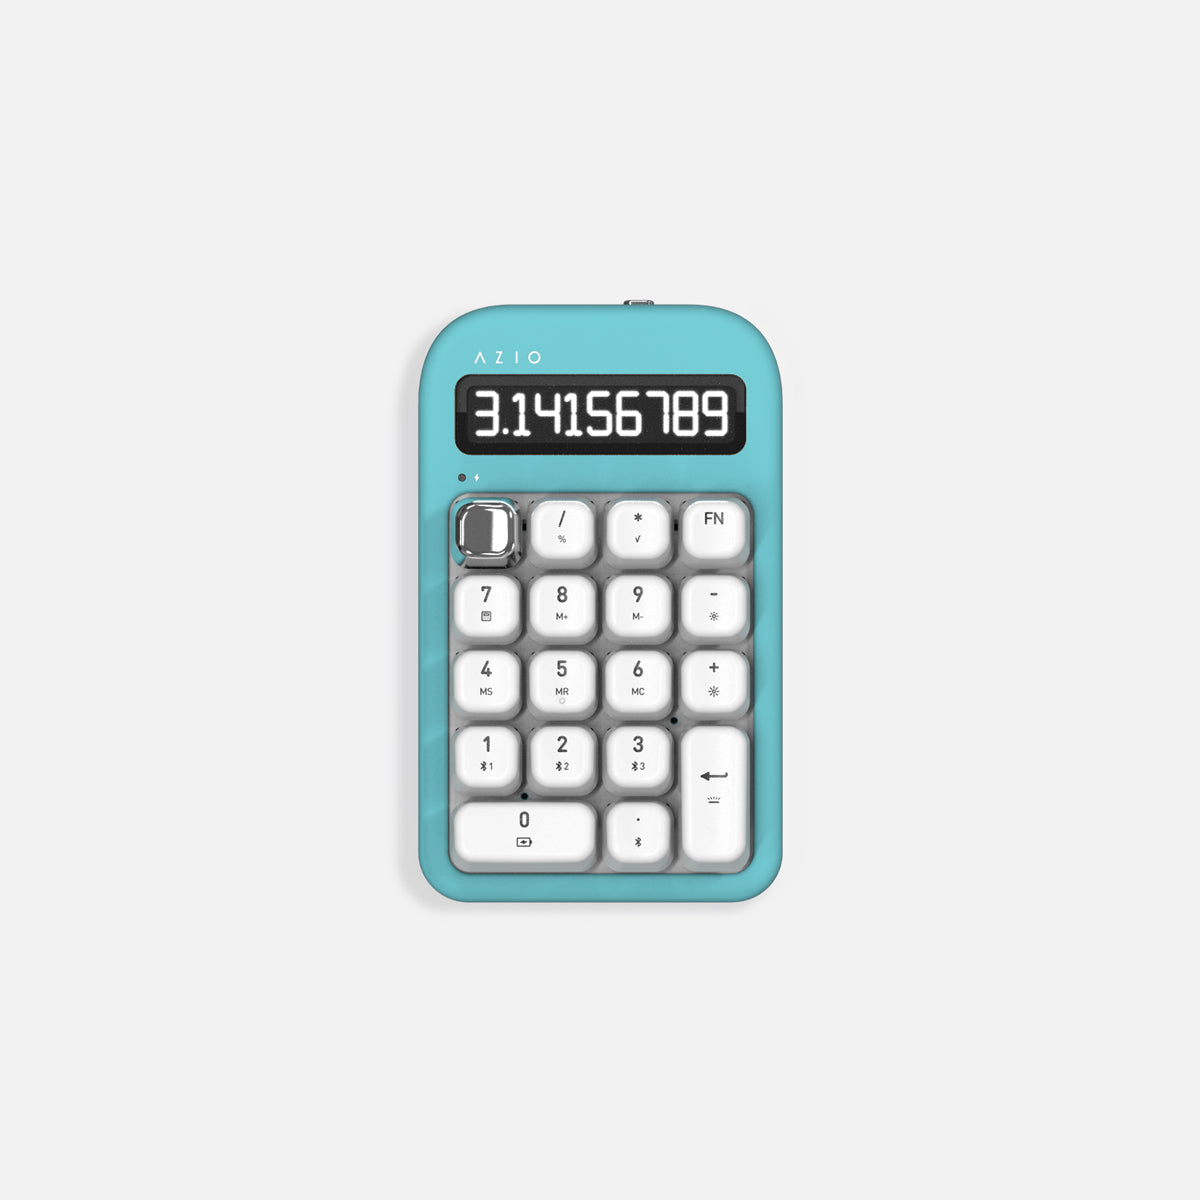 Izo numpad / kalkulator (sakelar merah)